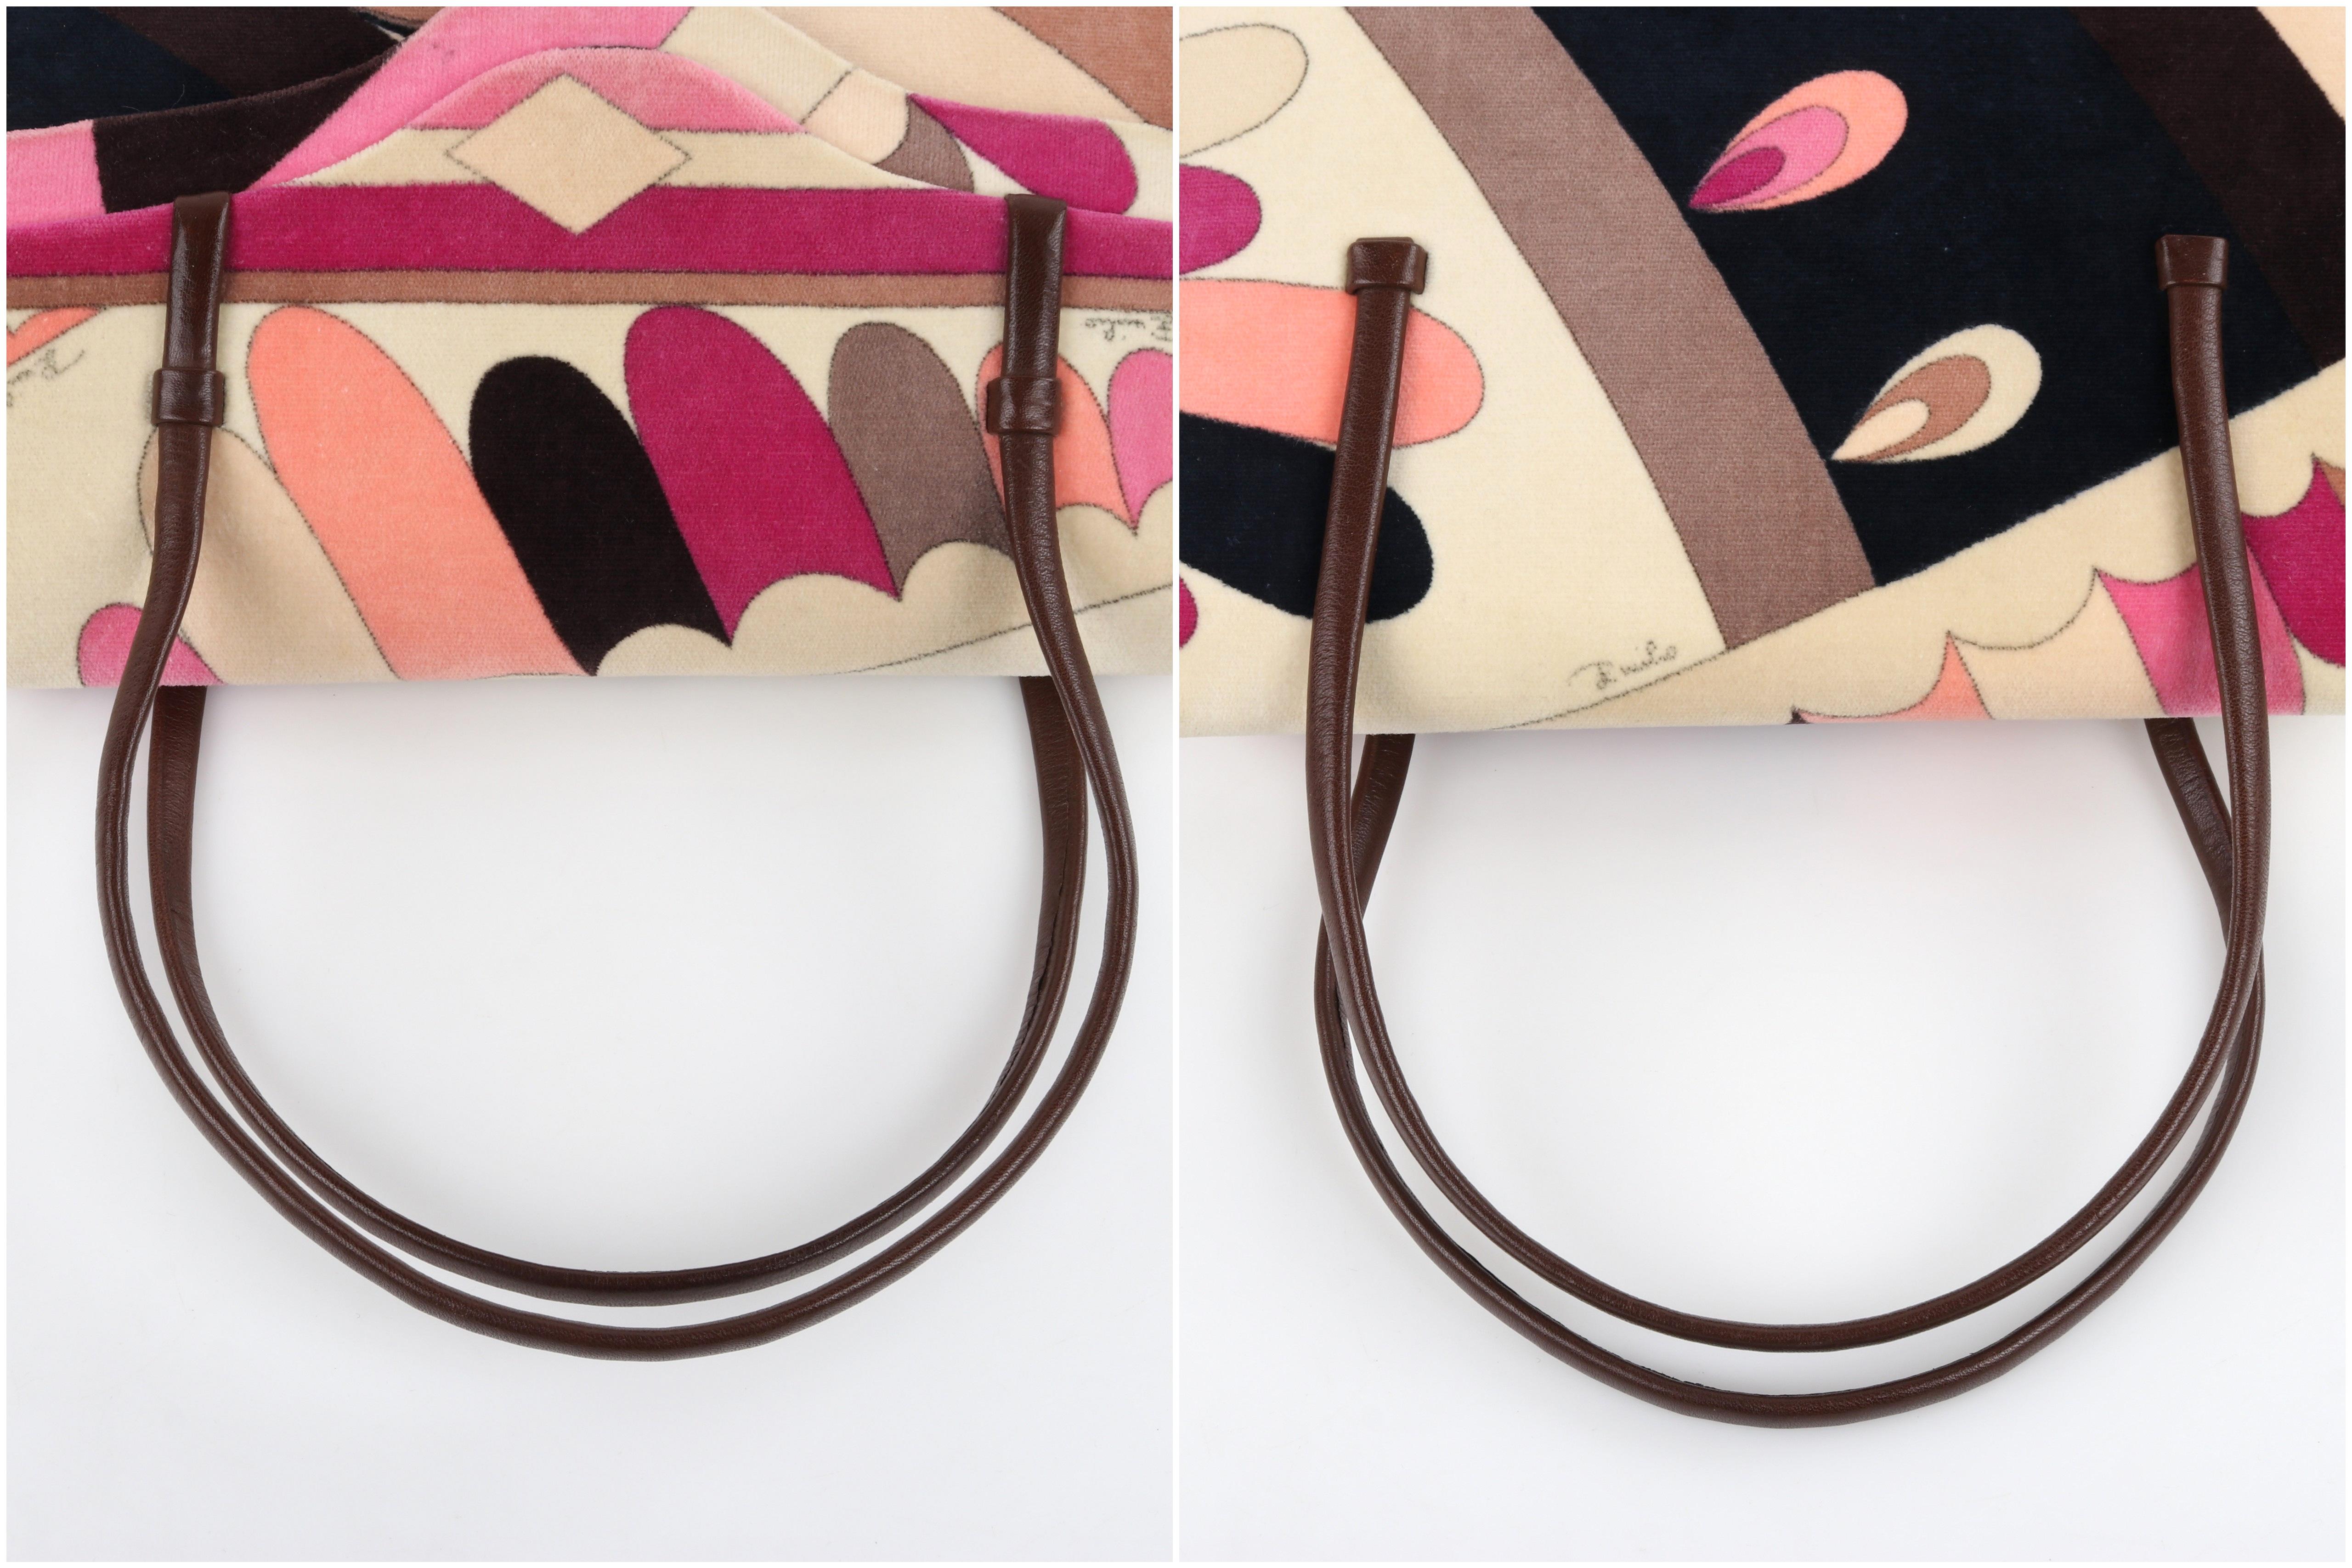 EMILIO PUCCI c.1960's Multicolor Velvet Abstract Print Top Handle Mini Handbag For Sale 8